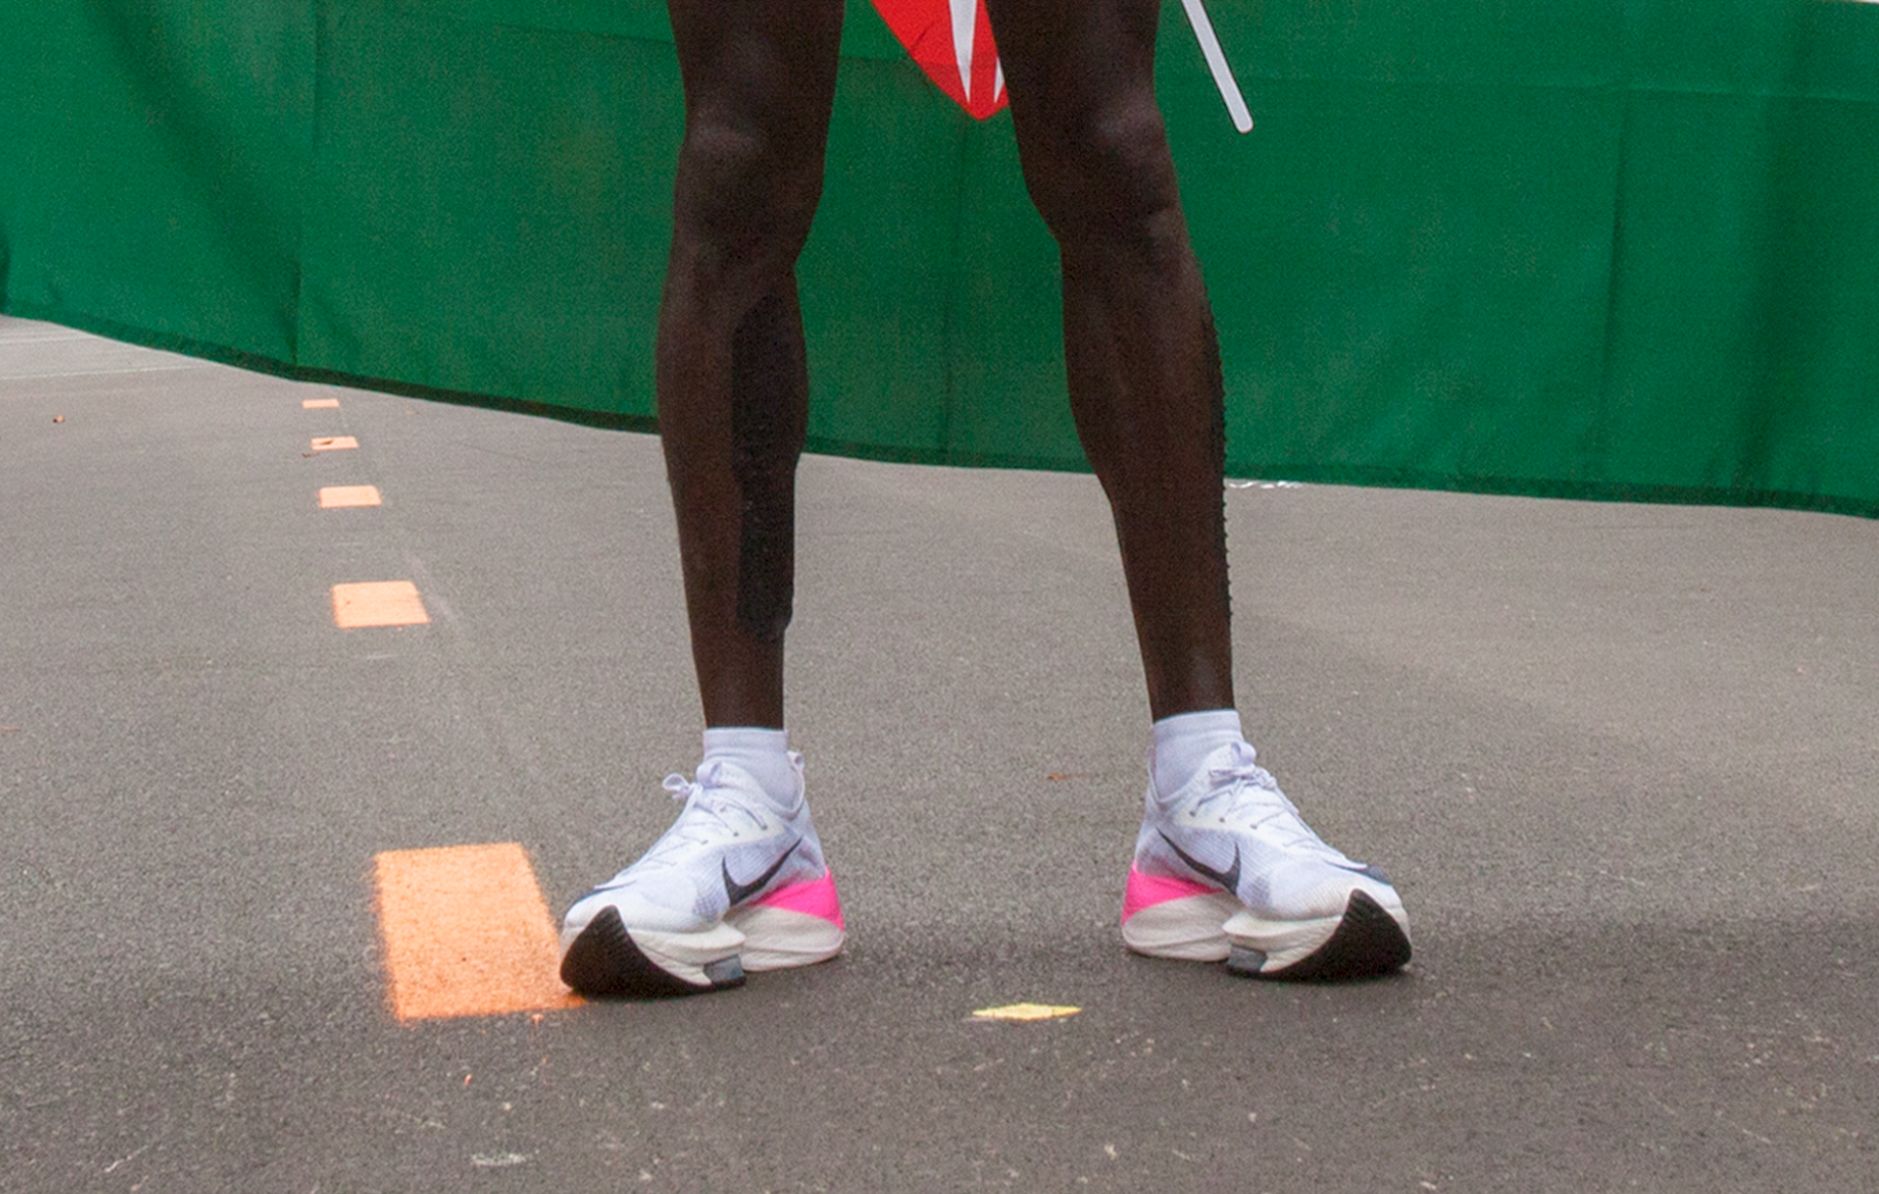 radium Sluier Verduisteren Eliud Kipchoge's record-breaking Nike shoes under scrutiny | CNN